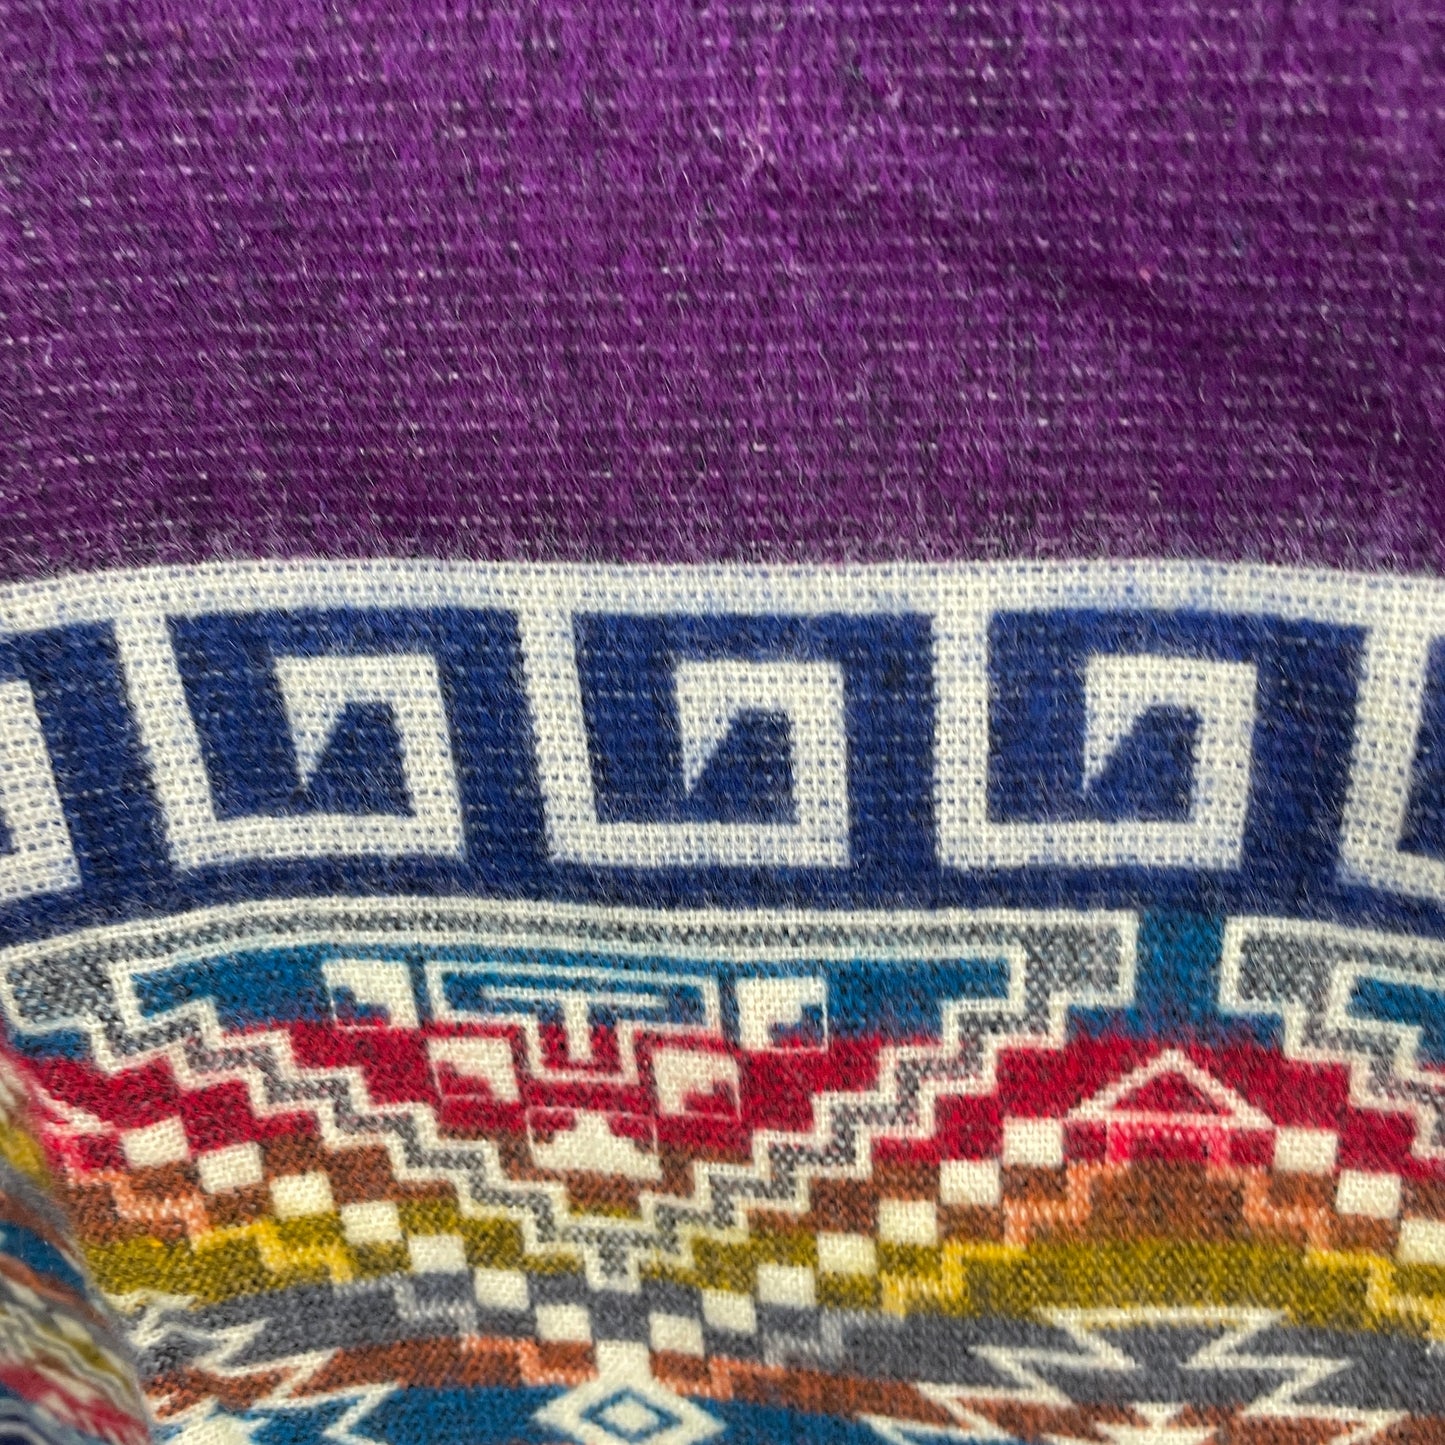 Warm Faux Fur Hooded Hippie Poncho Purple Colorful